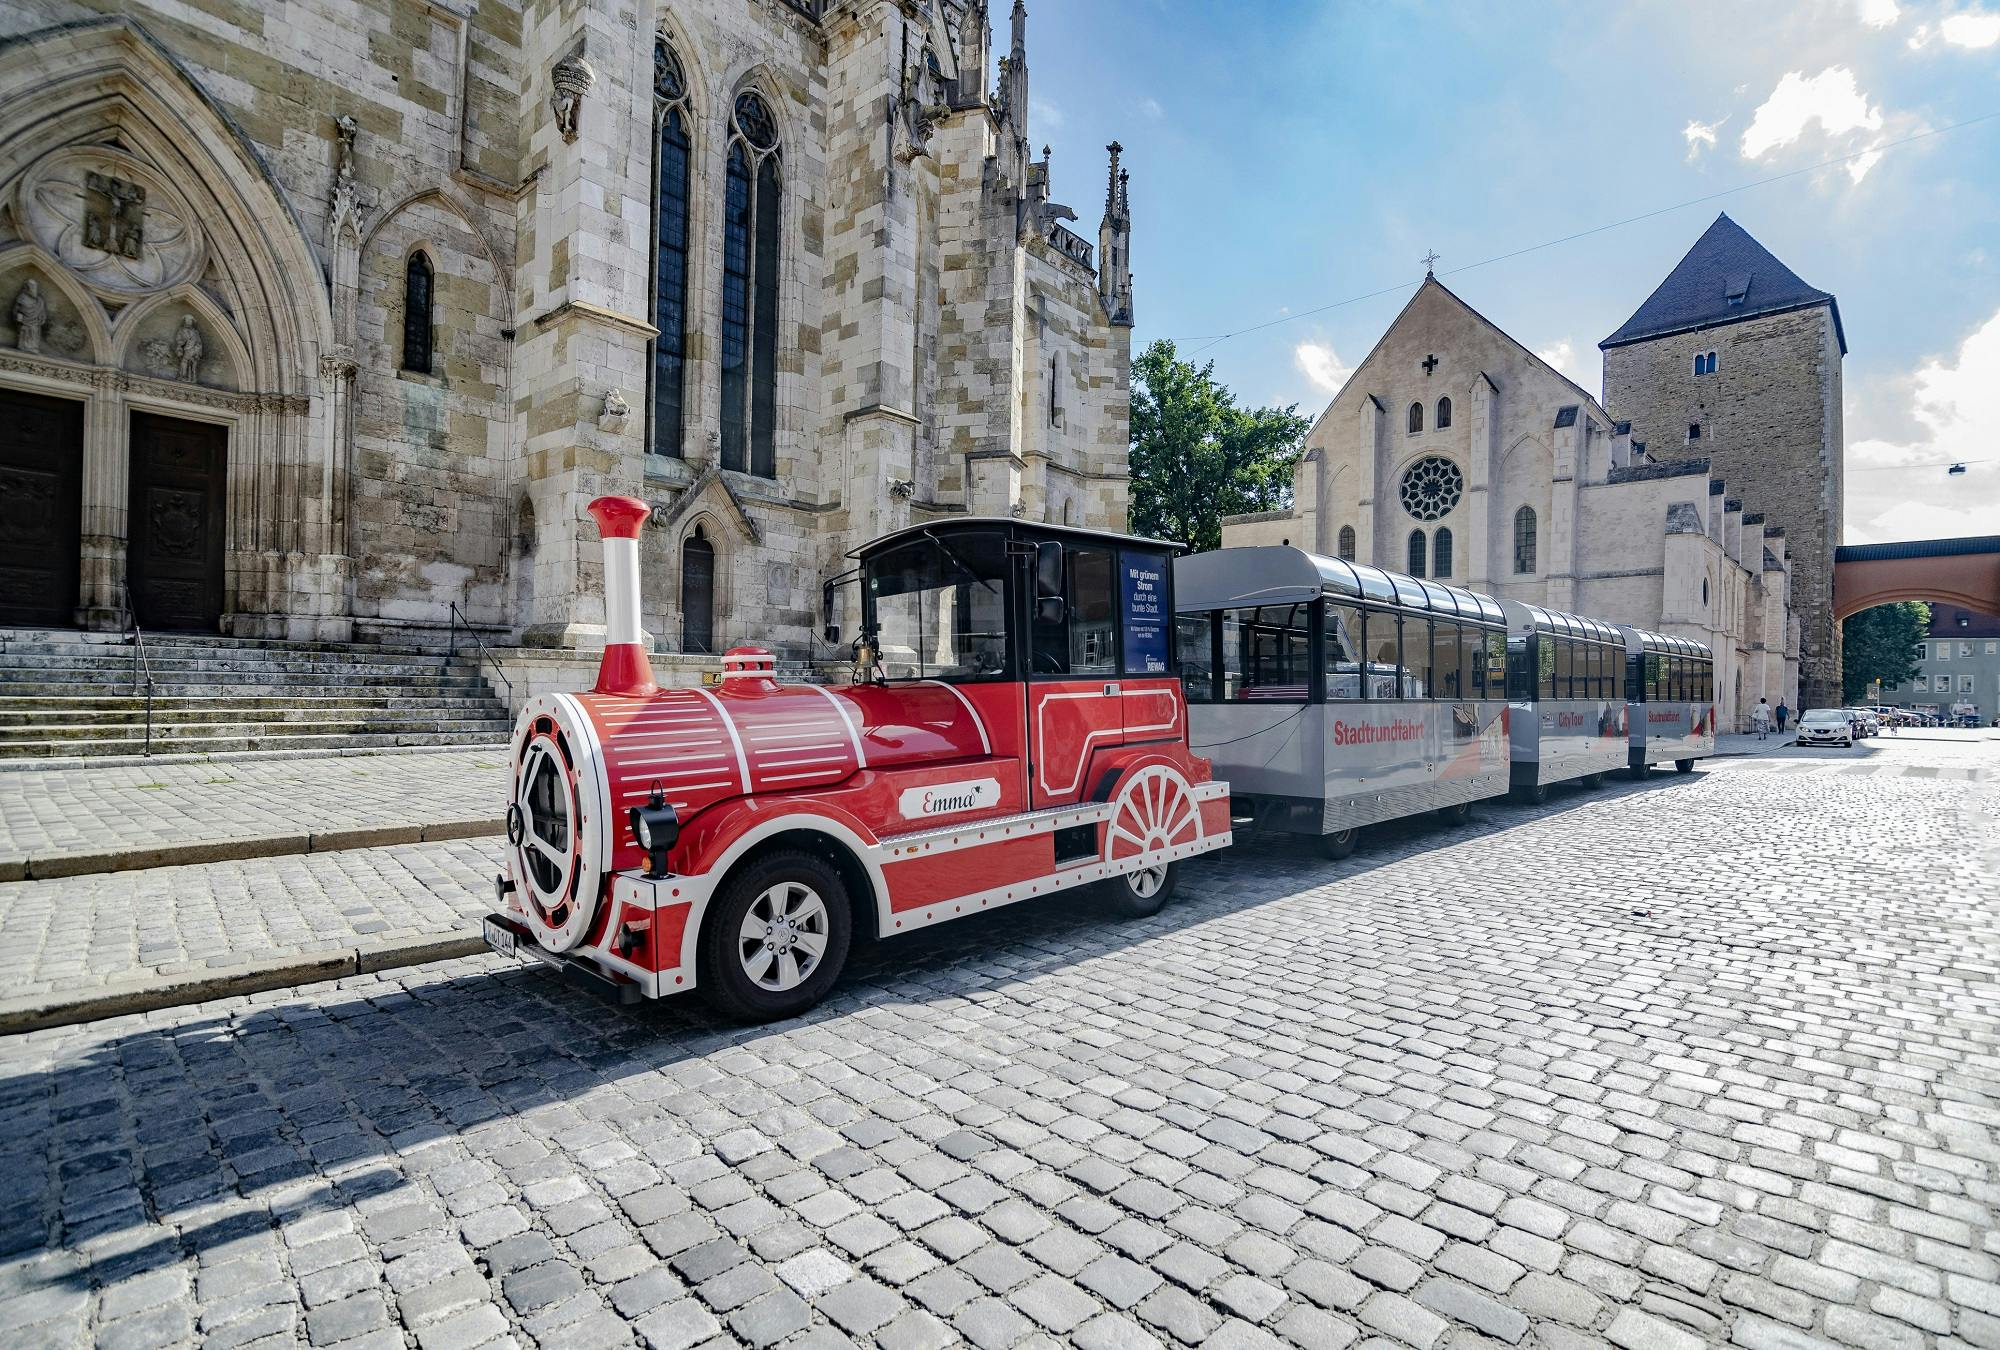 Ratisbona City Tour con la Bimmelbahn Partenza dalla Piazza del Duomo